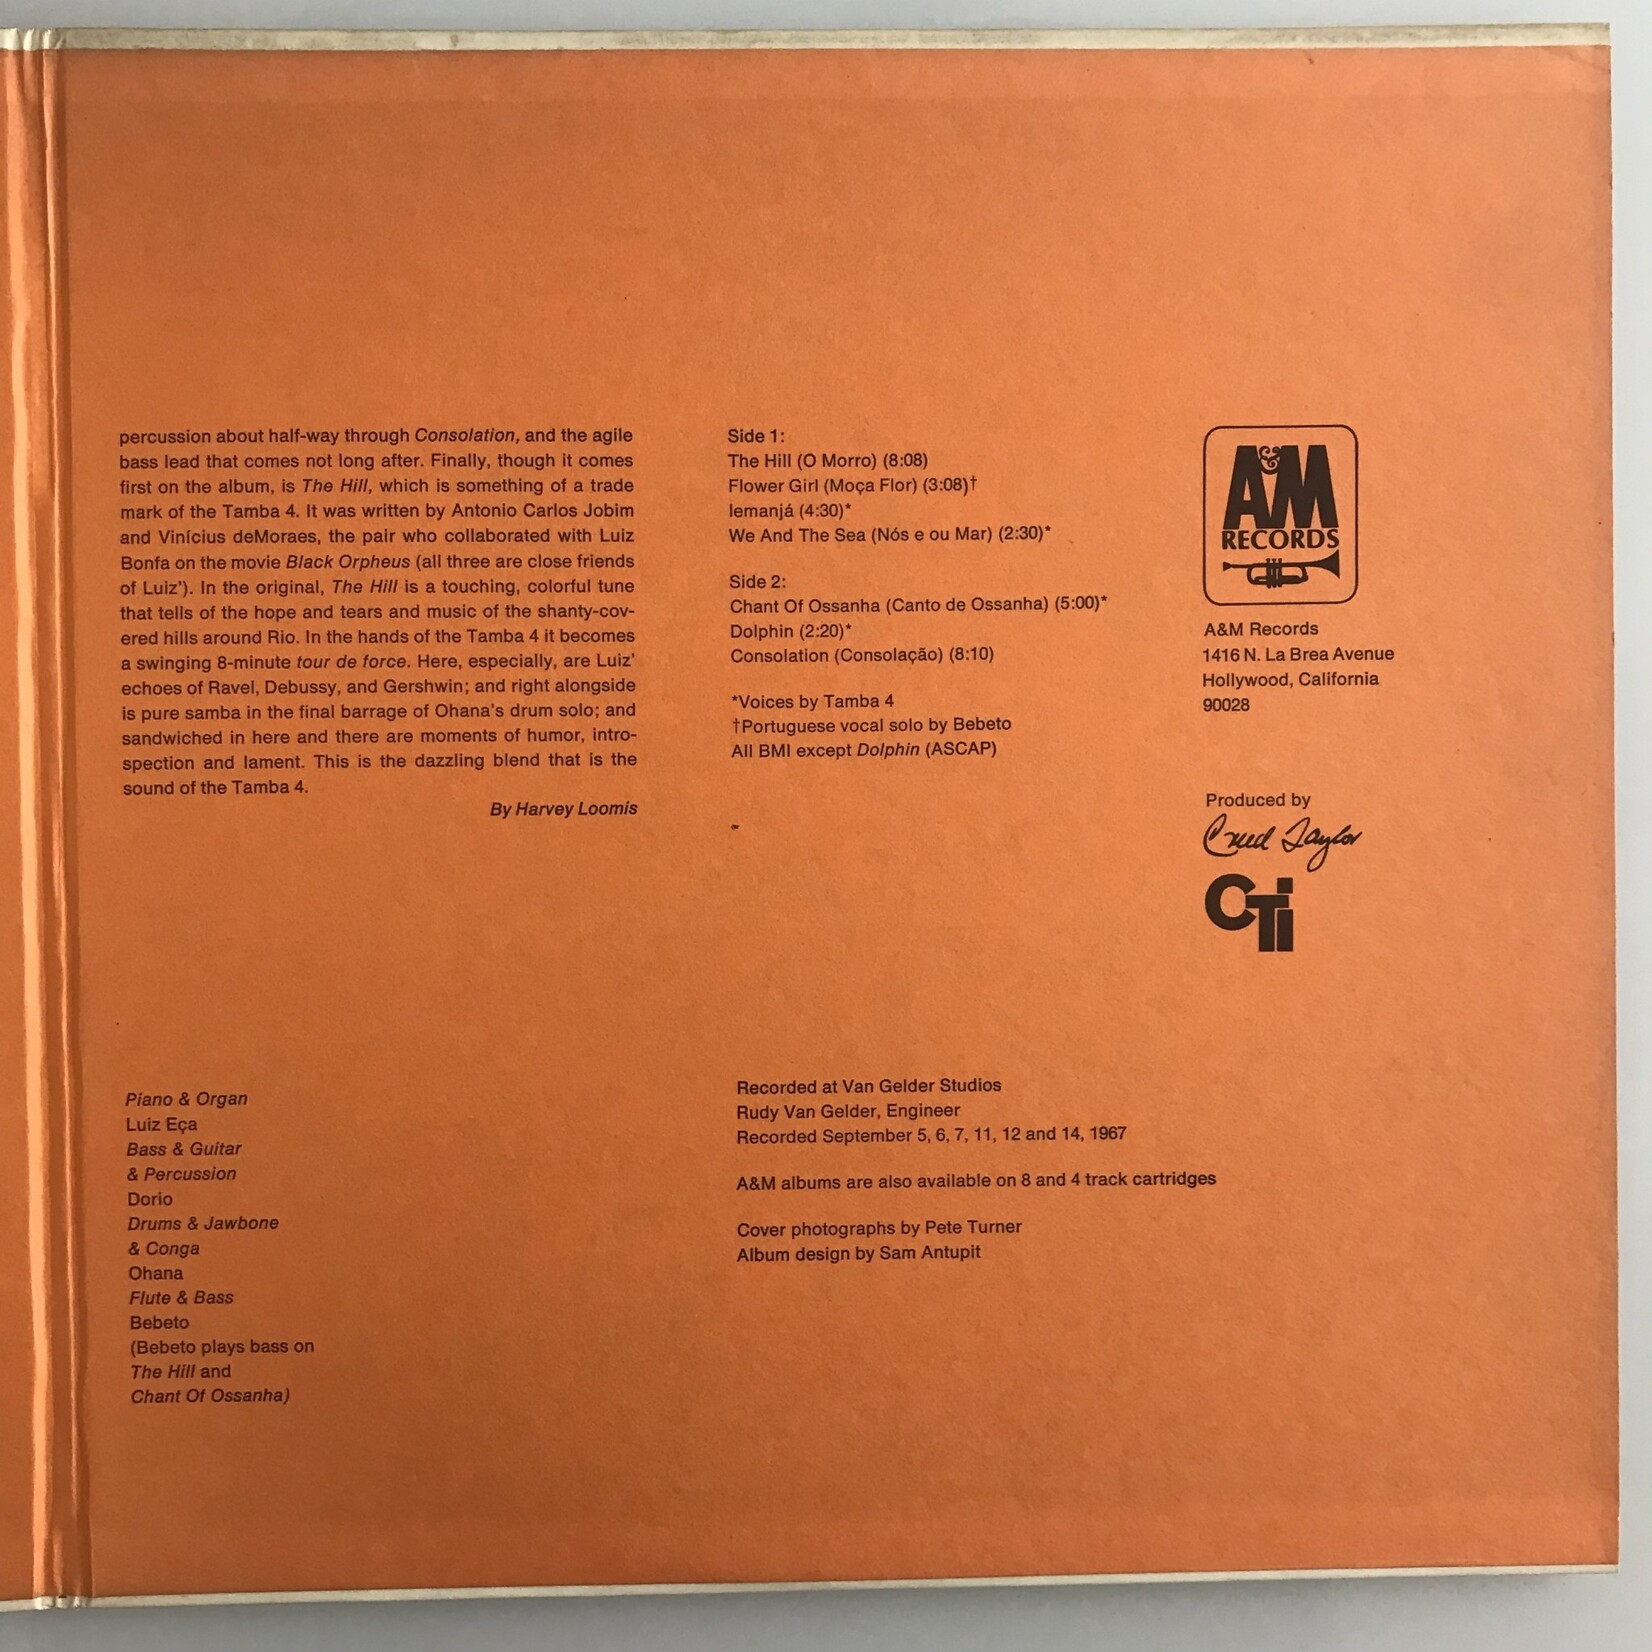 Tamba 4 - We And the Sea - Vinyl LP (USED)